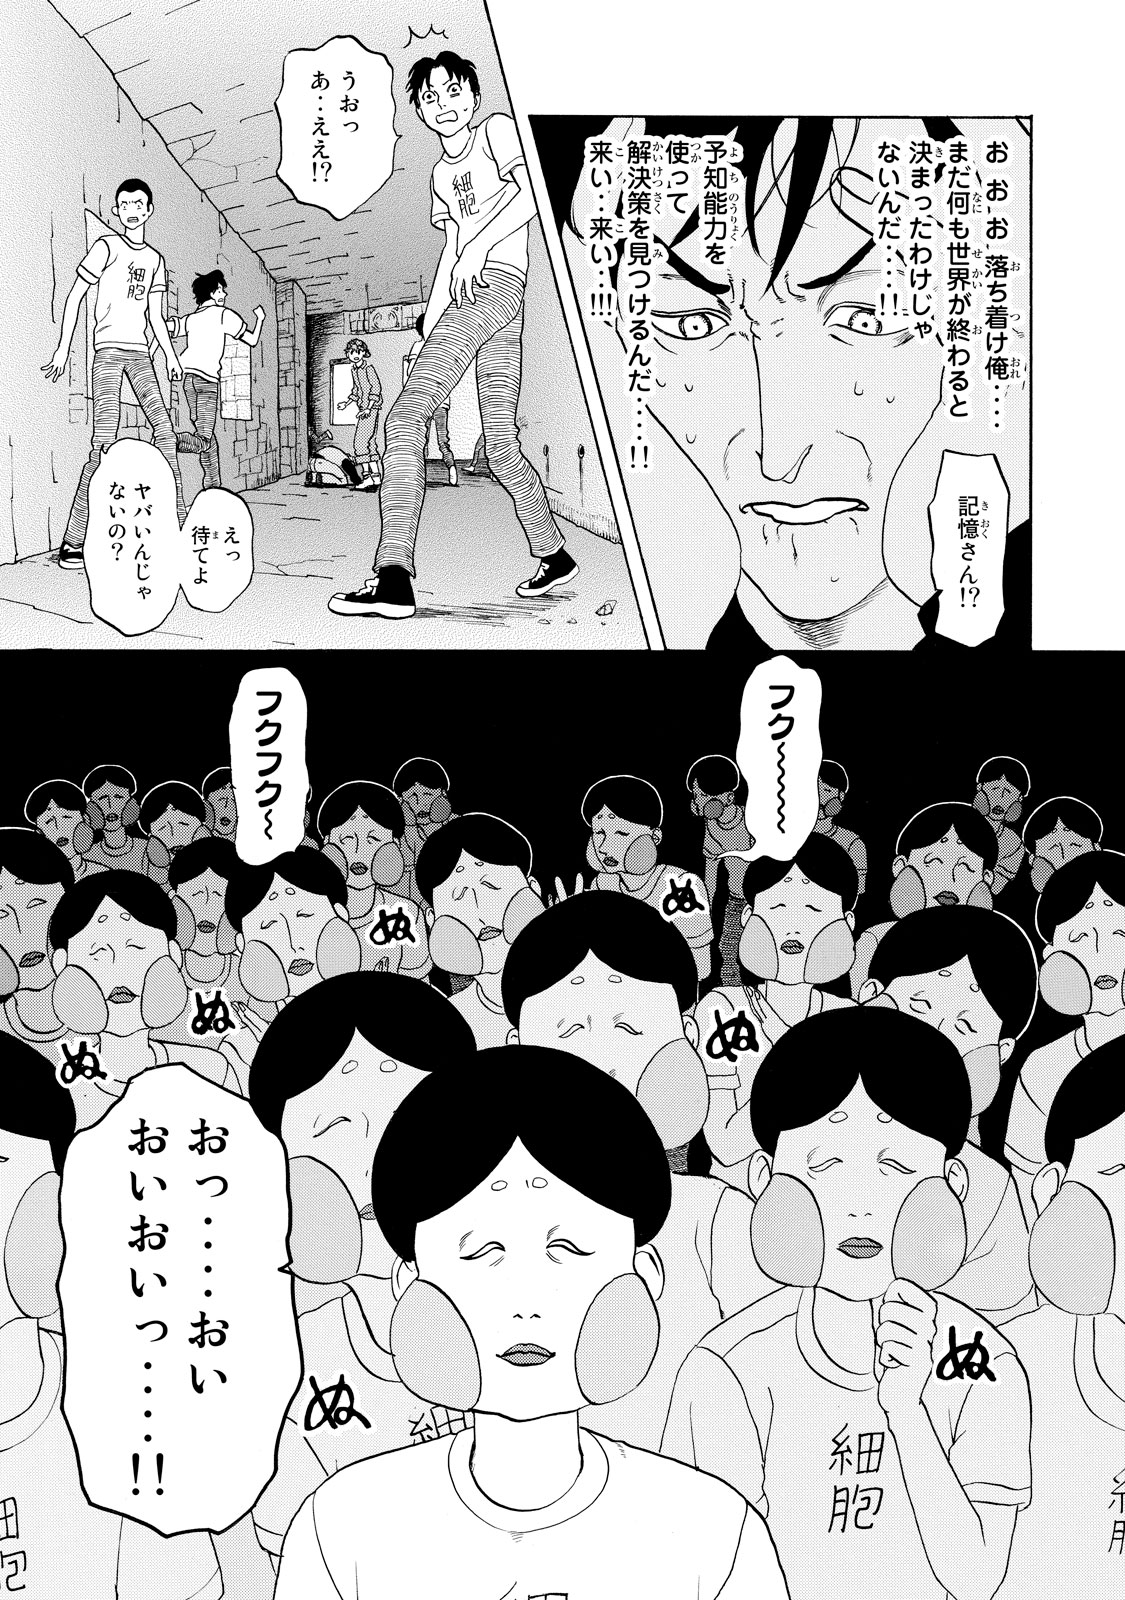 Hataraku Saibou - Chapter 13 - Page 7